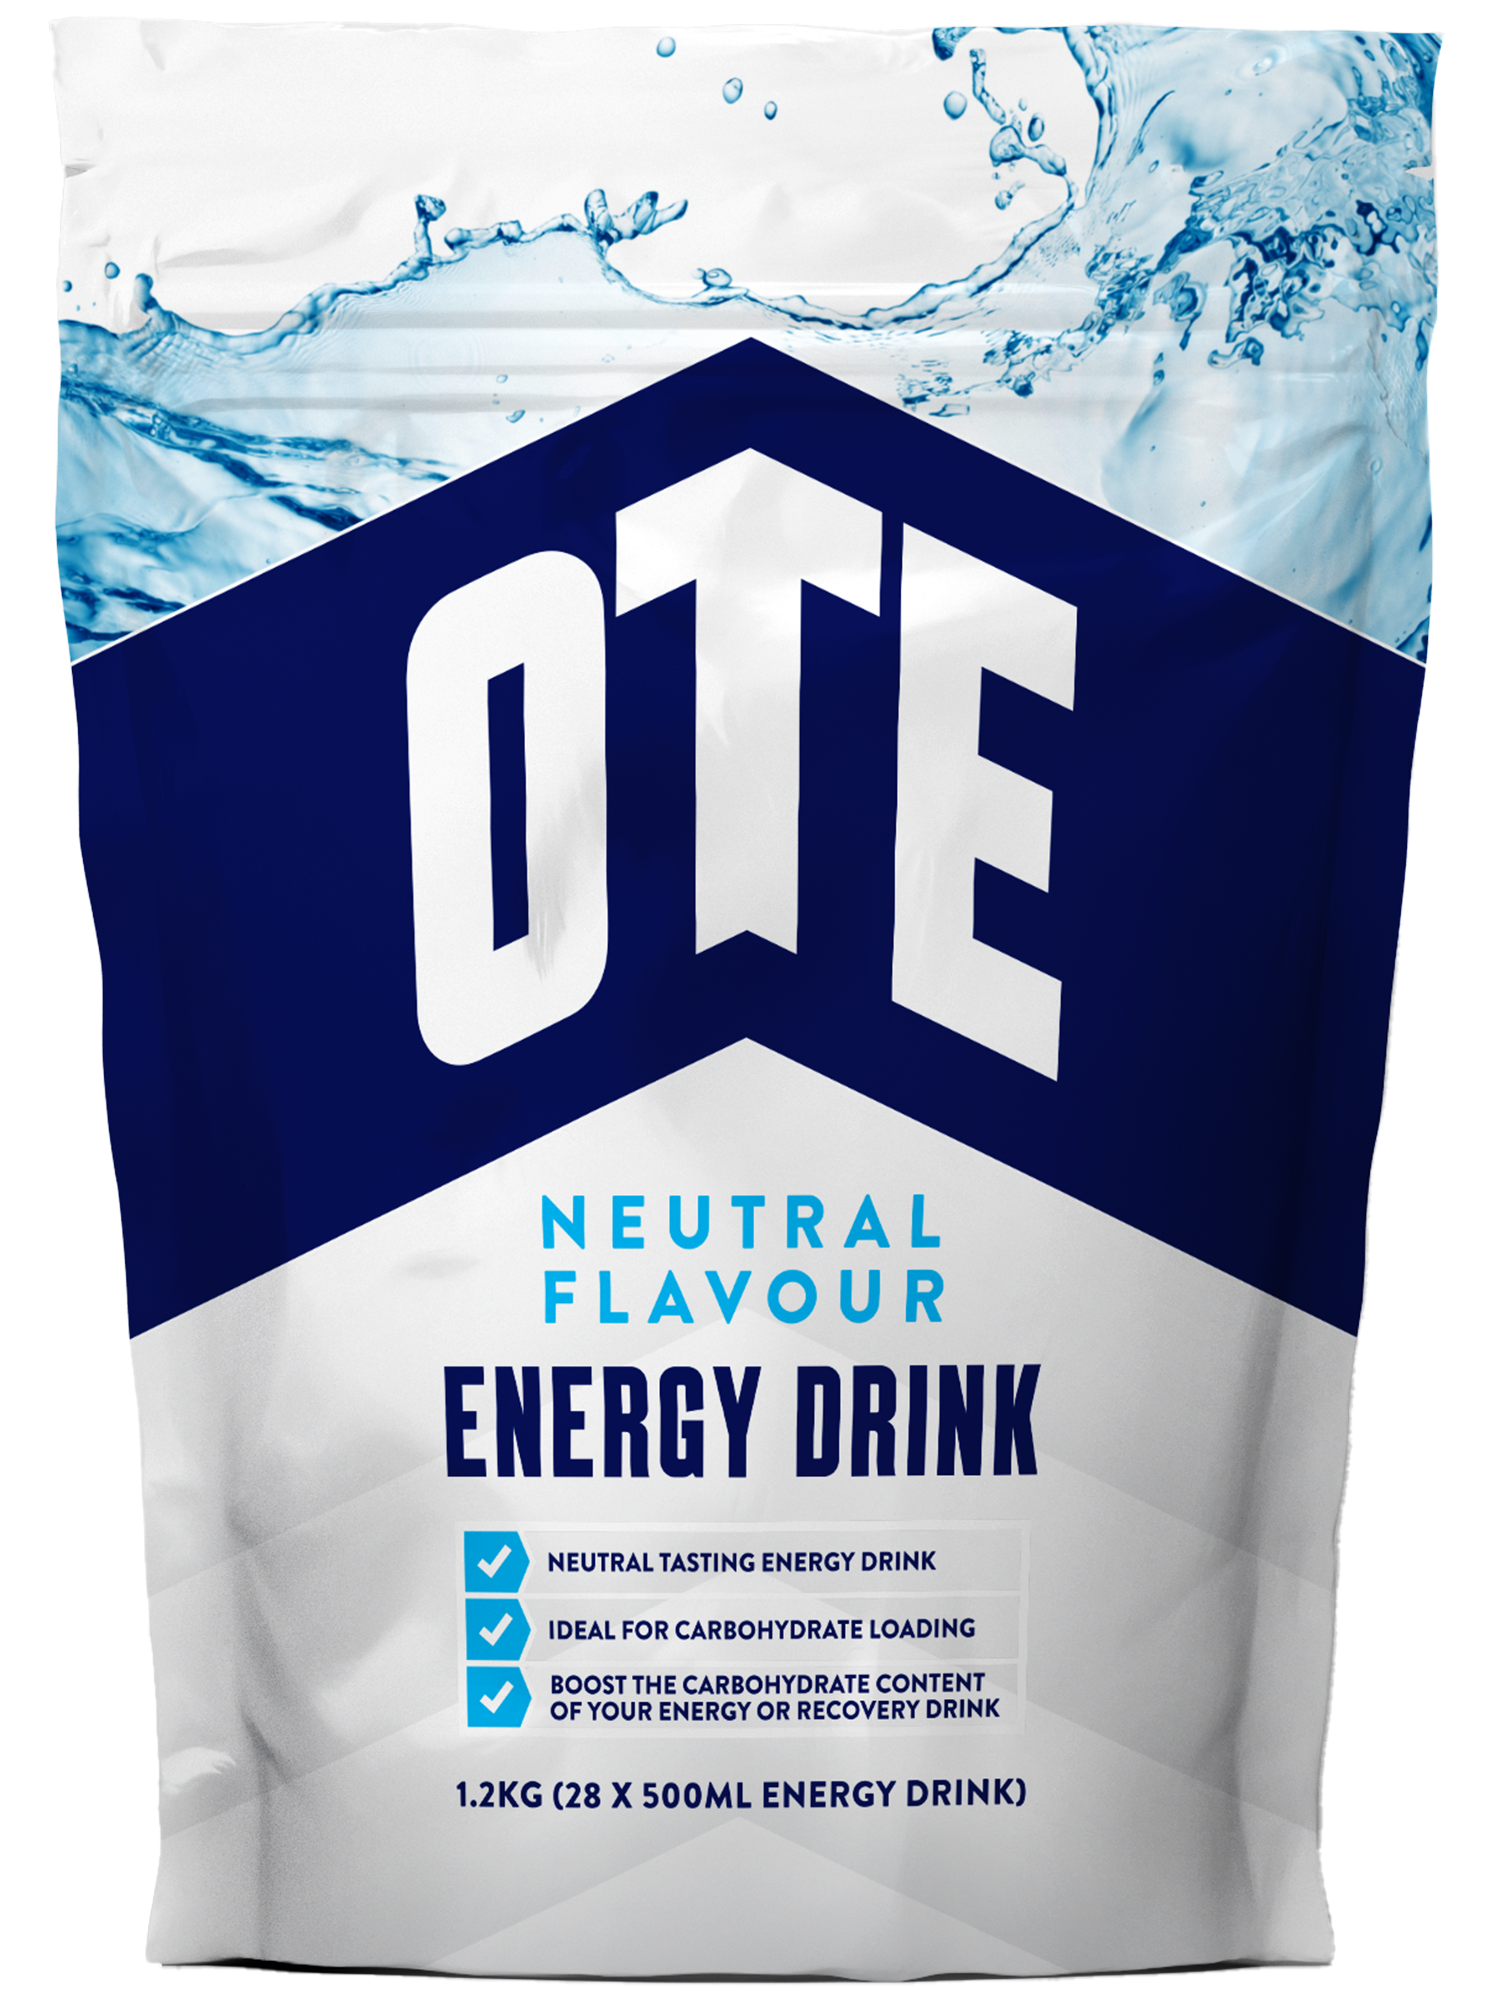 Neutral energy drink